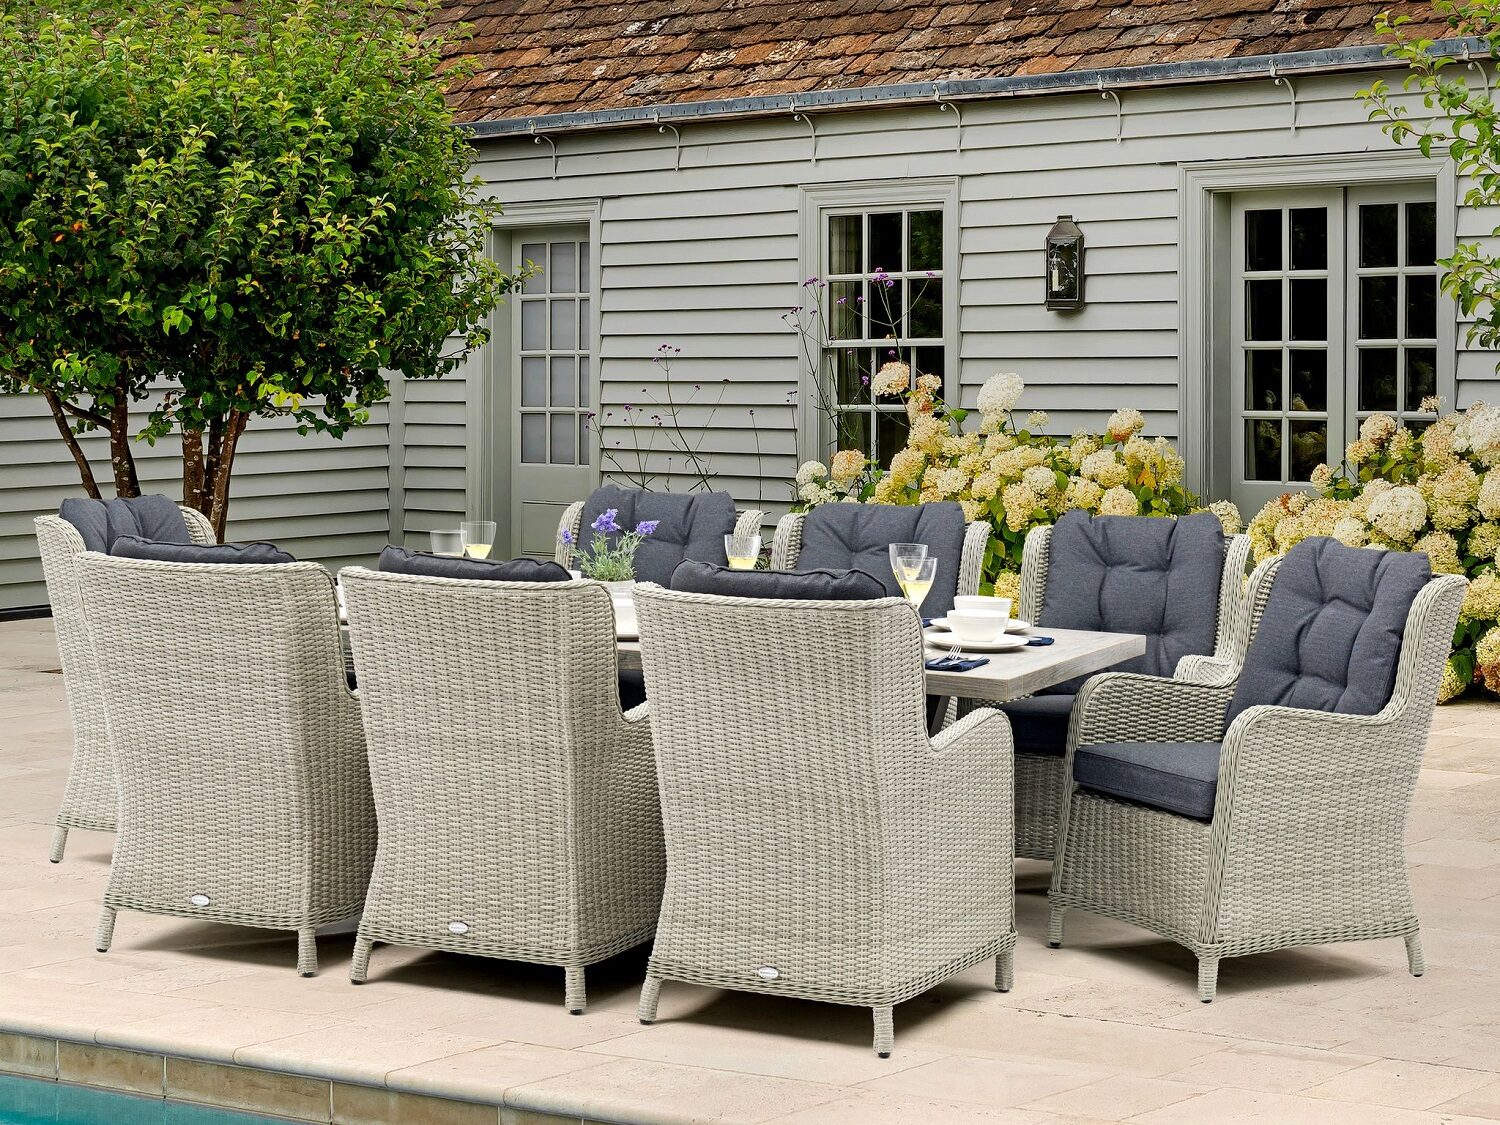 Bramblecrest Chedworth Rect Ceramic Table 8 Chairs Dove Grey Lifestyle Far 2